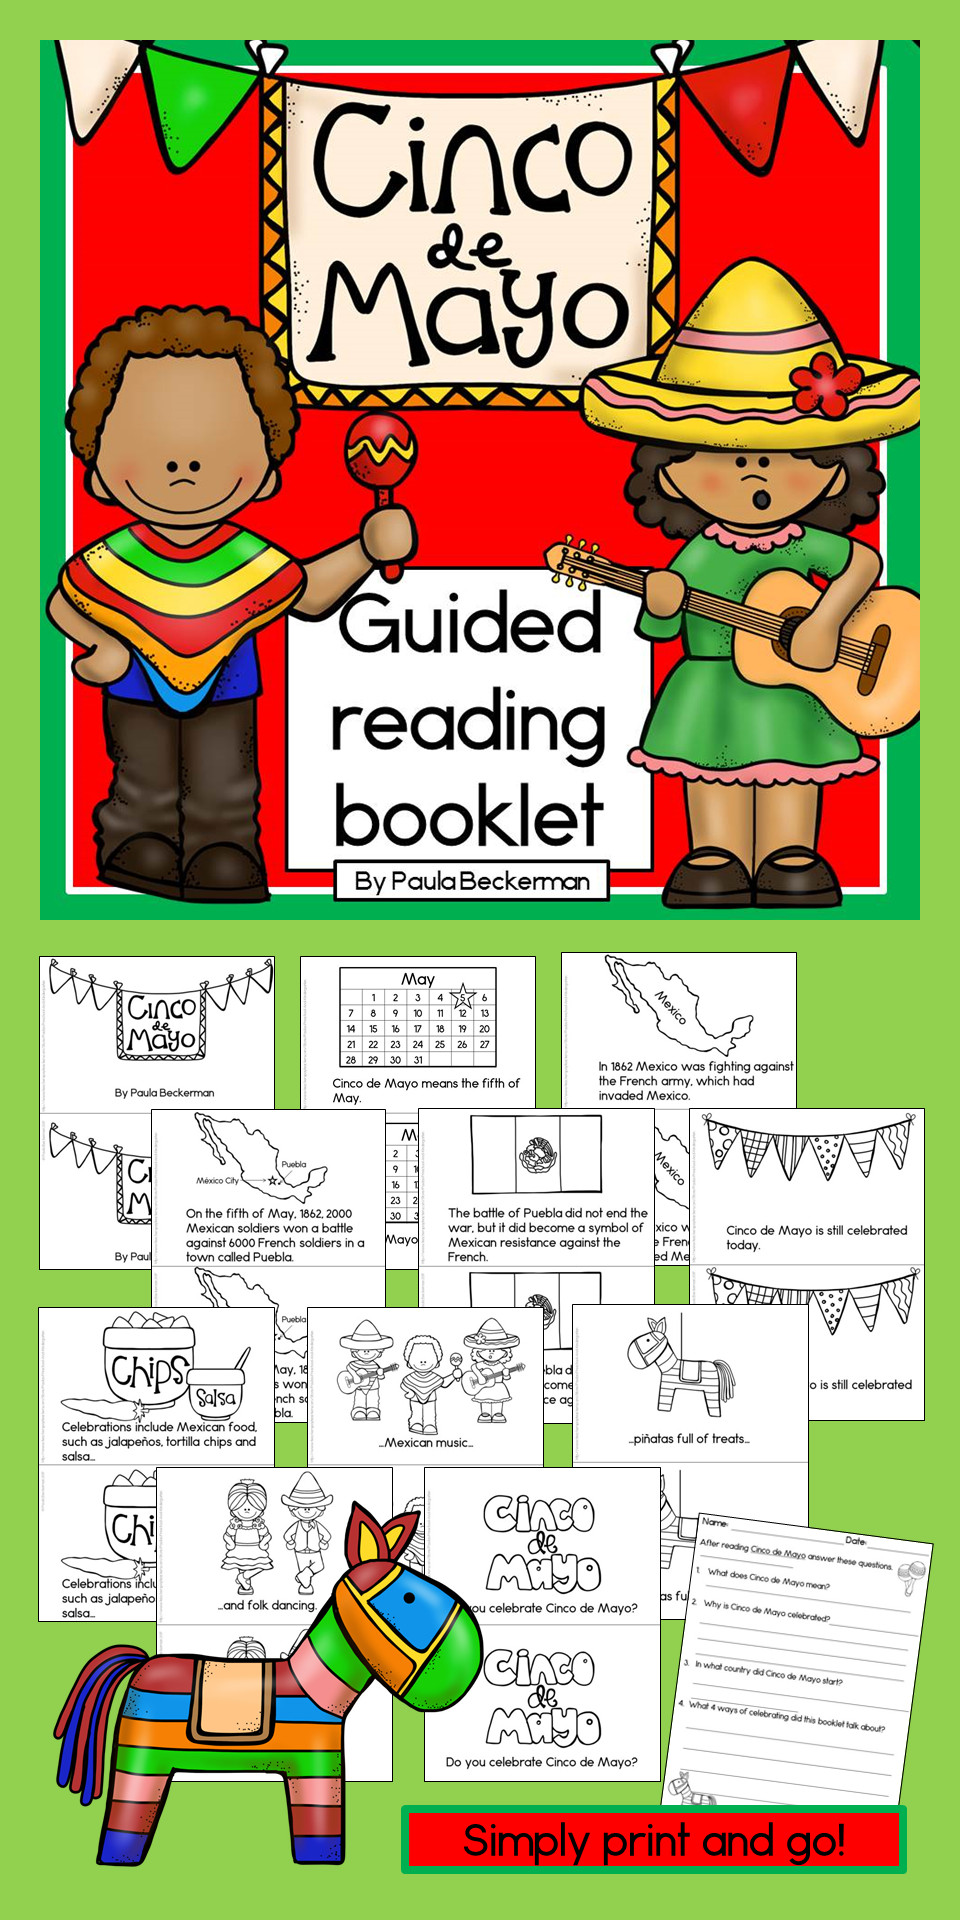 Cinco De Mayo Activities For Kindergarten
 Cinco de Mayo reproducible guided reading booklet